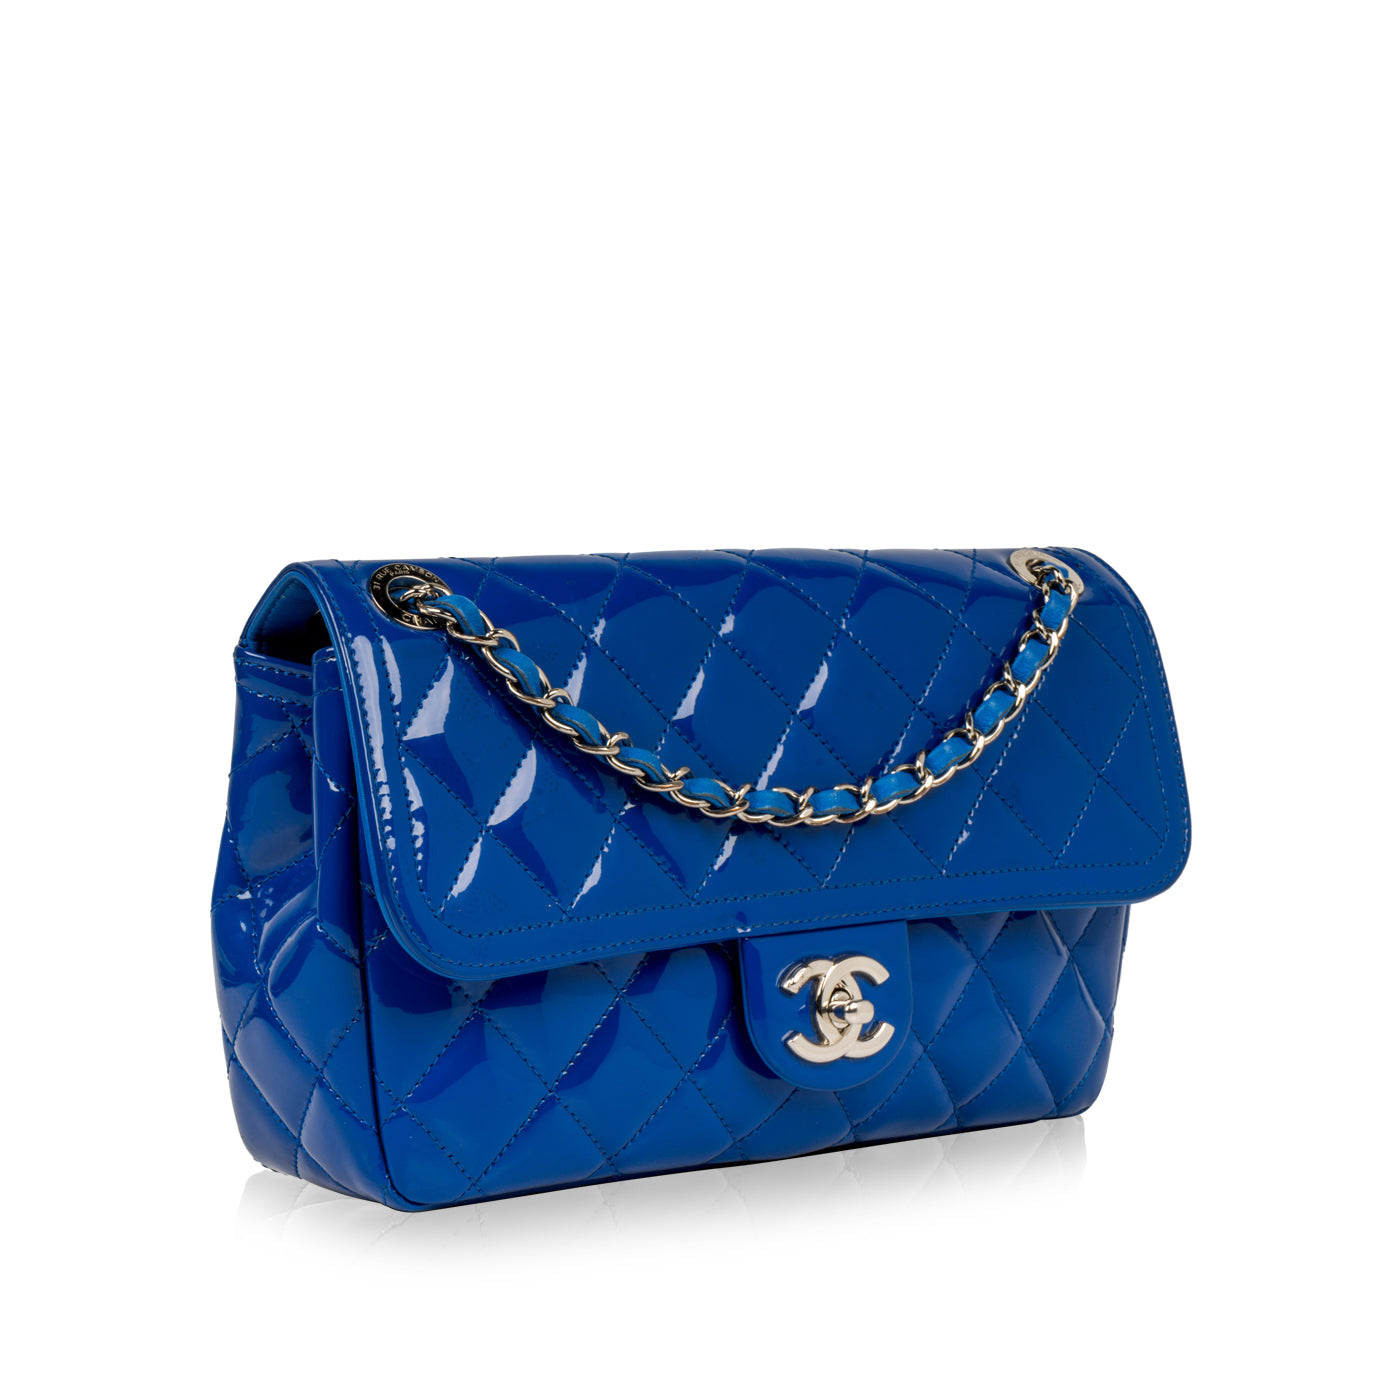 Chanel Patent Leather Medium Coco Shine Flap Blue